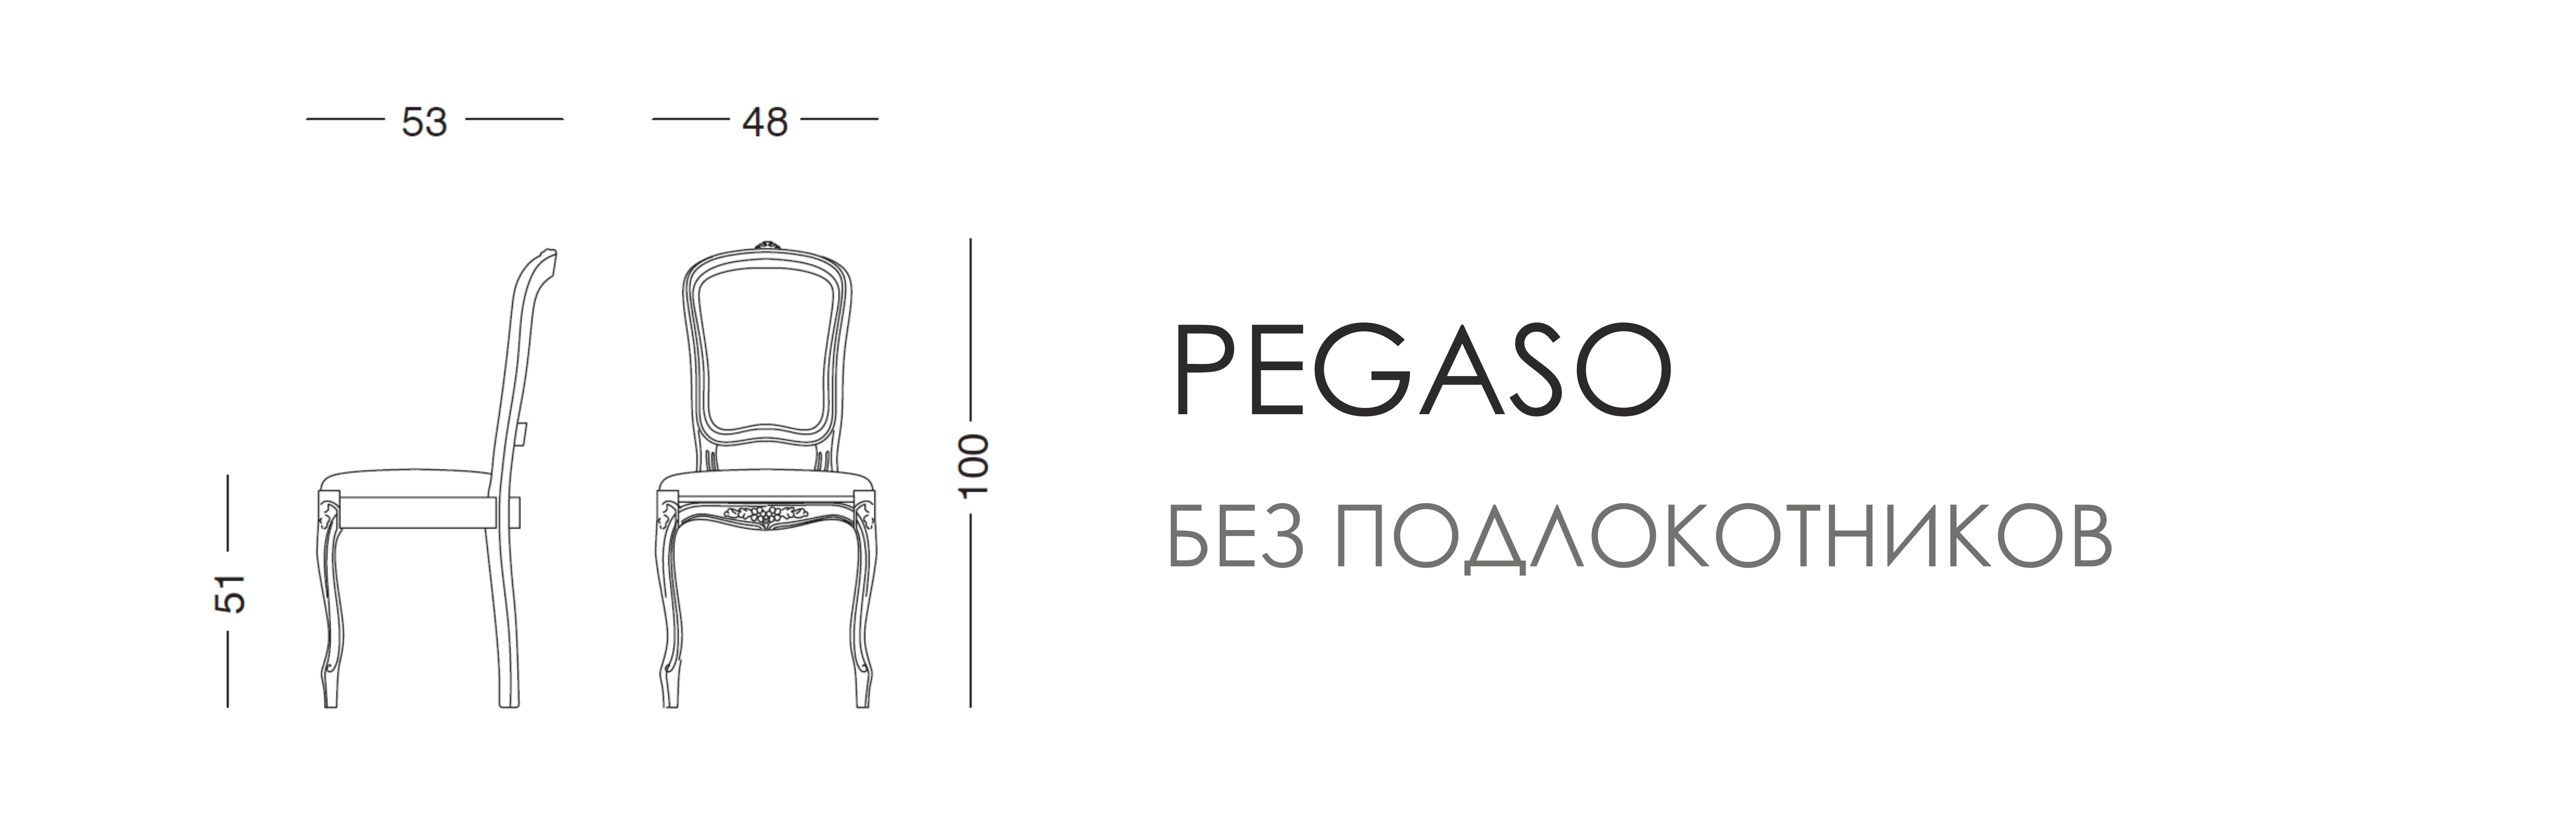 Стул - Pegaso без подлокотников